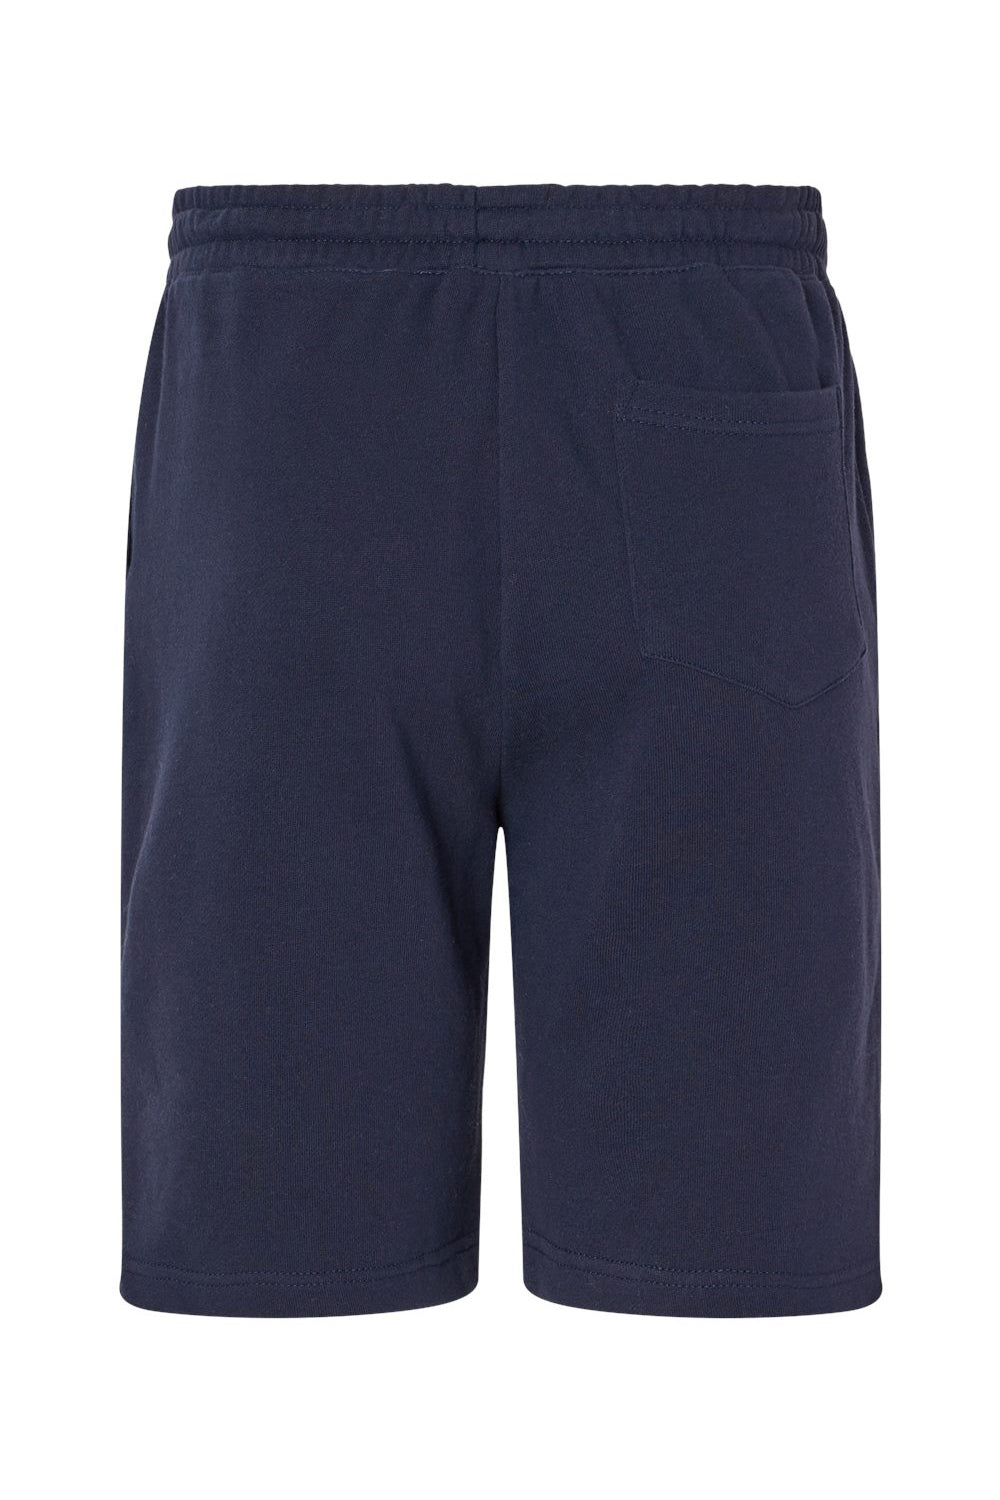 Independent Trading Co. IND20SRT Mens Fleece Shorts w/ Pockets Classic Navy Blue Flat Back